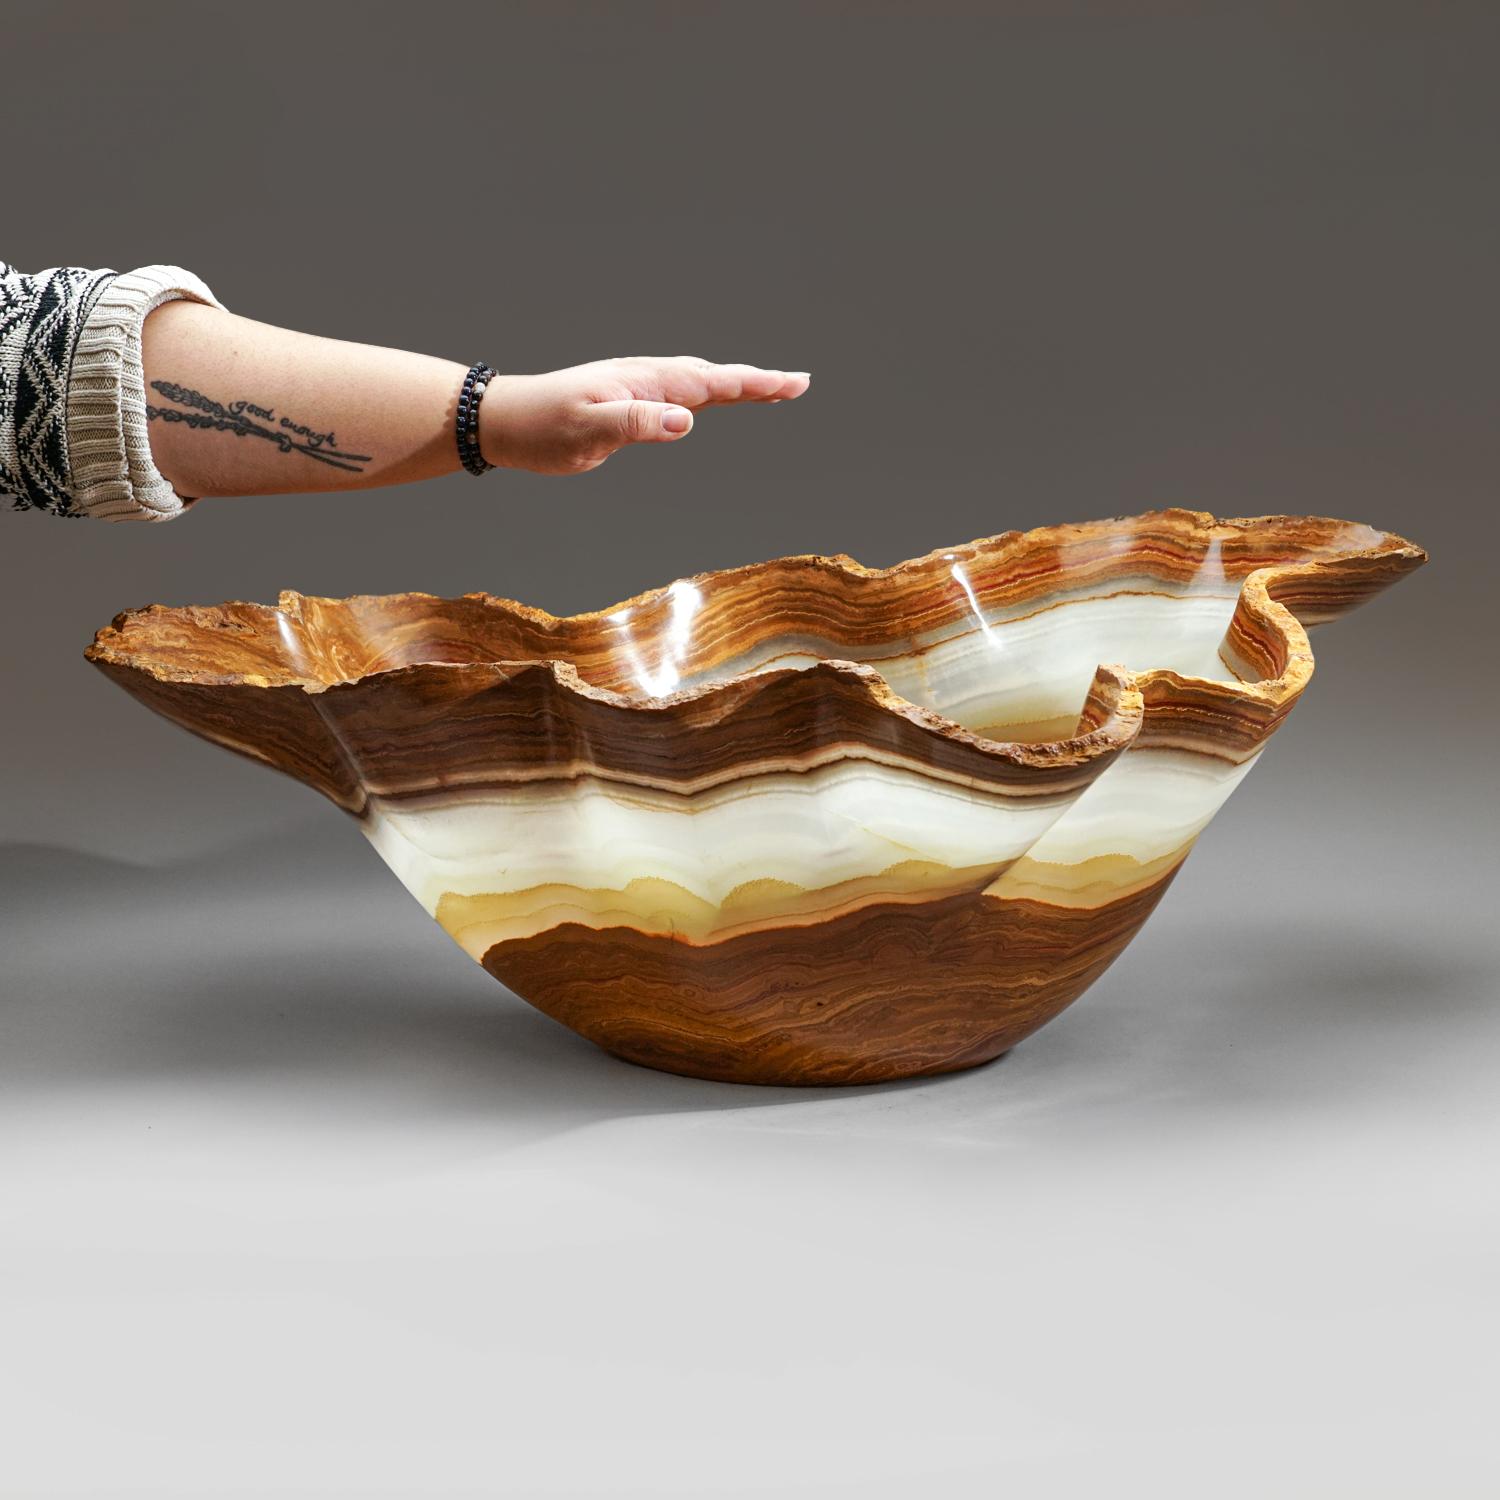 Large Polished Onyx Decorative Bowl from Mexico (29